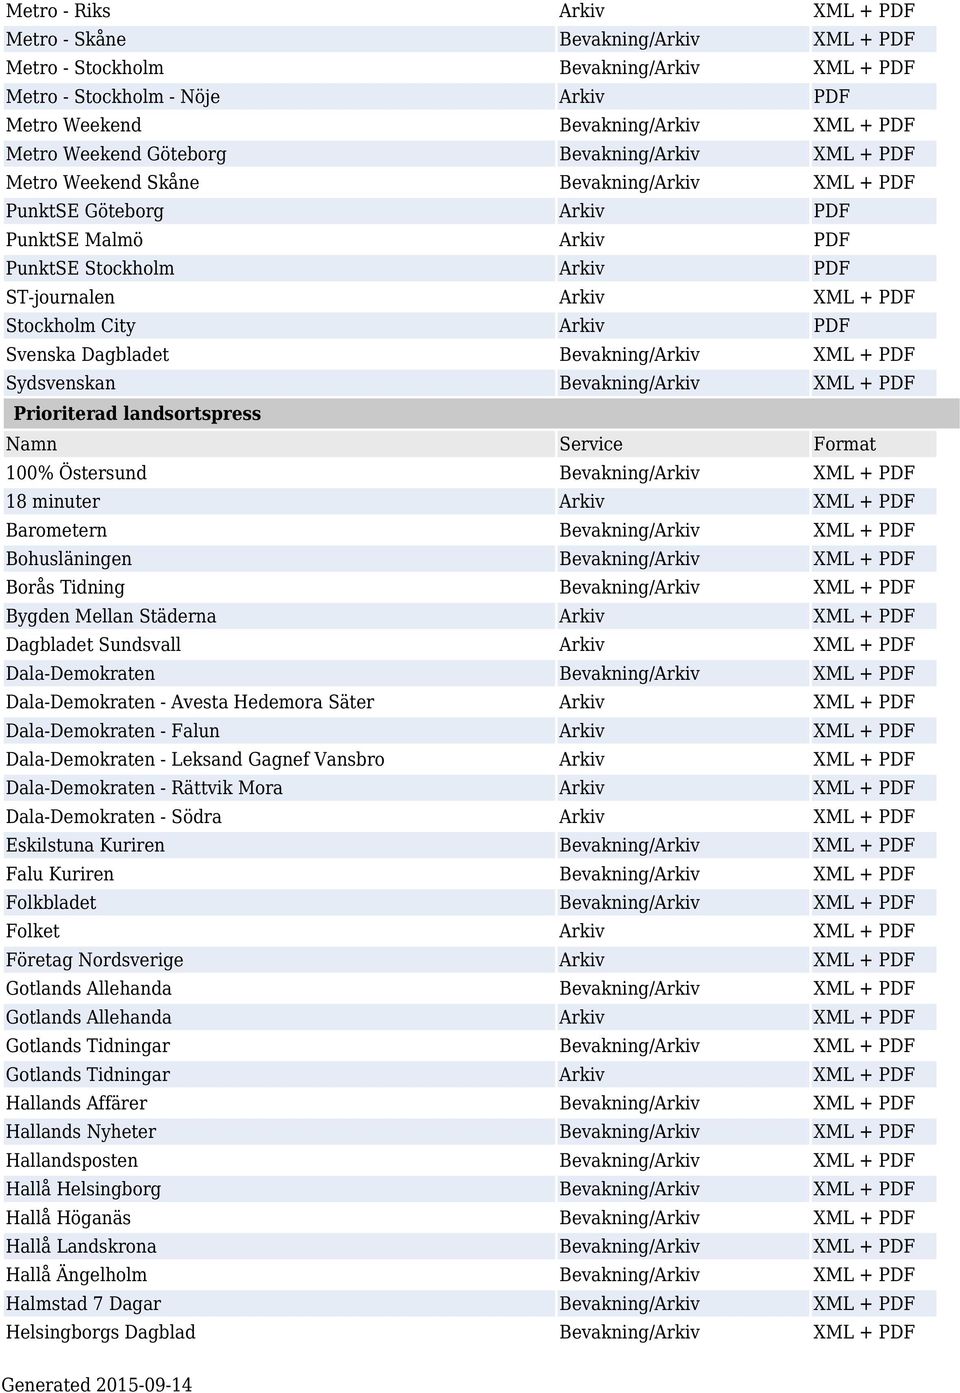 Stockholm City Arkiv PDF Svenska Dagbladet Bevakning/Arkiv XML + PDF Sydsvenskan Bevakning/Arkiv XML + PDF Prioriterad landsortspress Namn Service Format 100% Östersund Bevakning/Arkiv XML + PDF 18